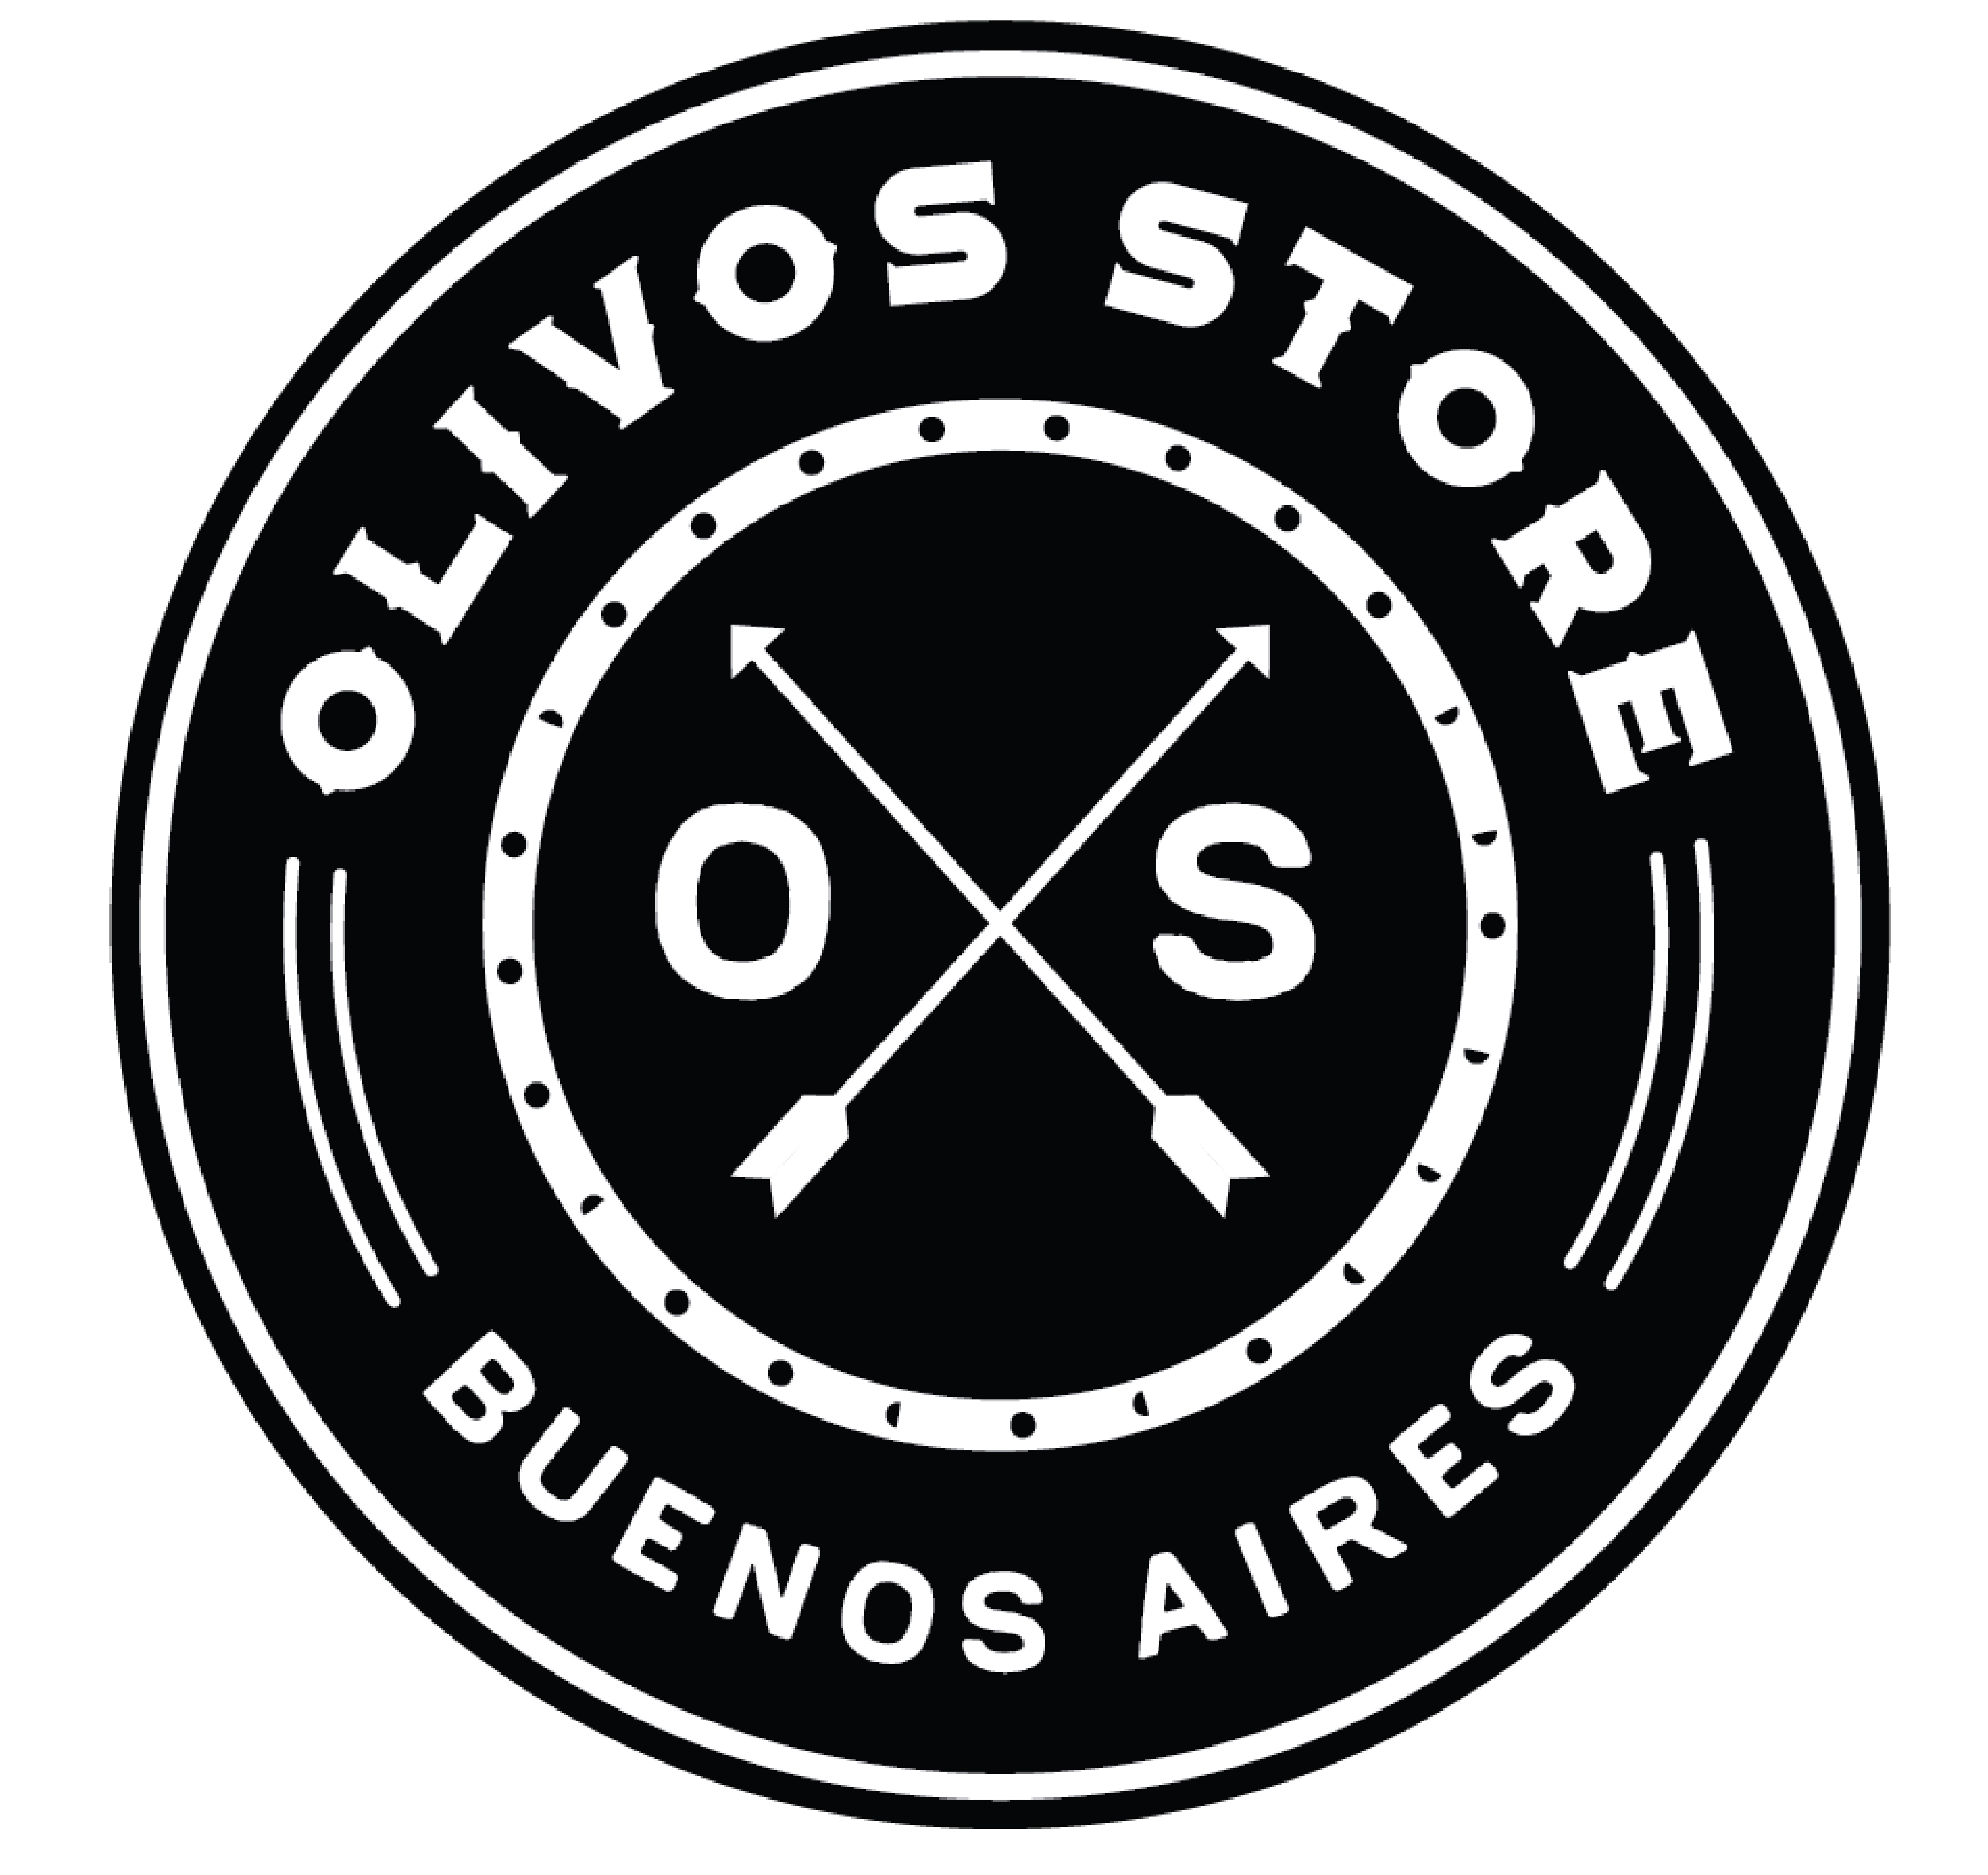 OLIVOS STORE